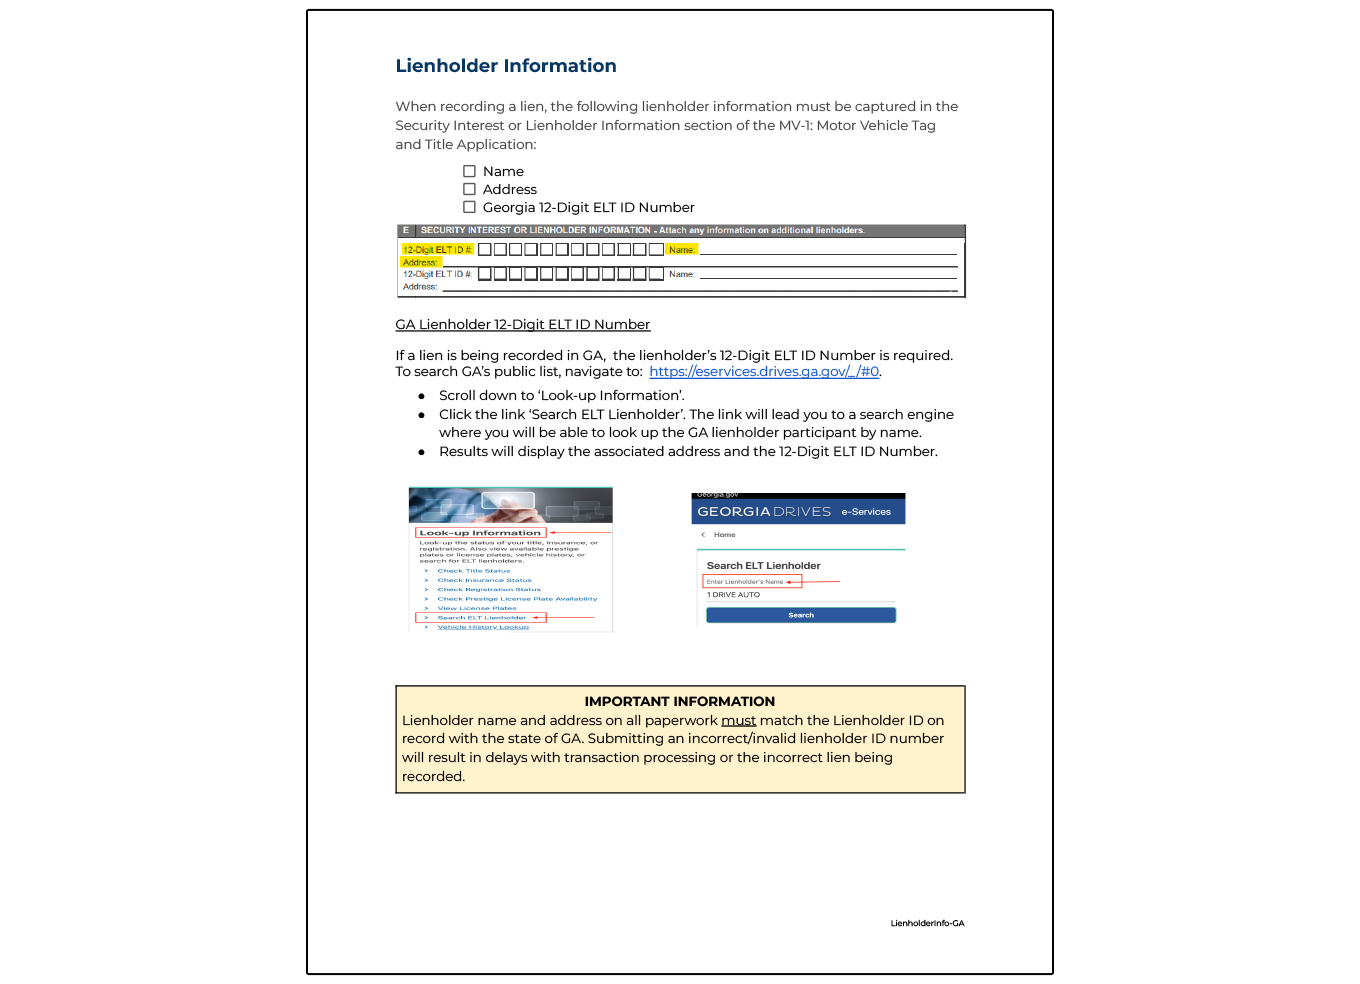 Example Lienholder information sheet provided by Vitu Interstate